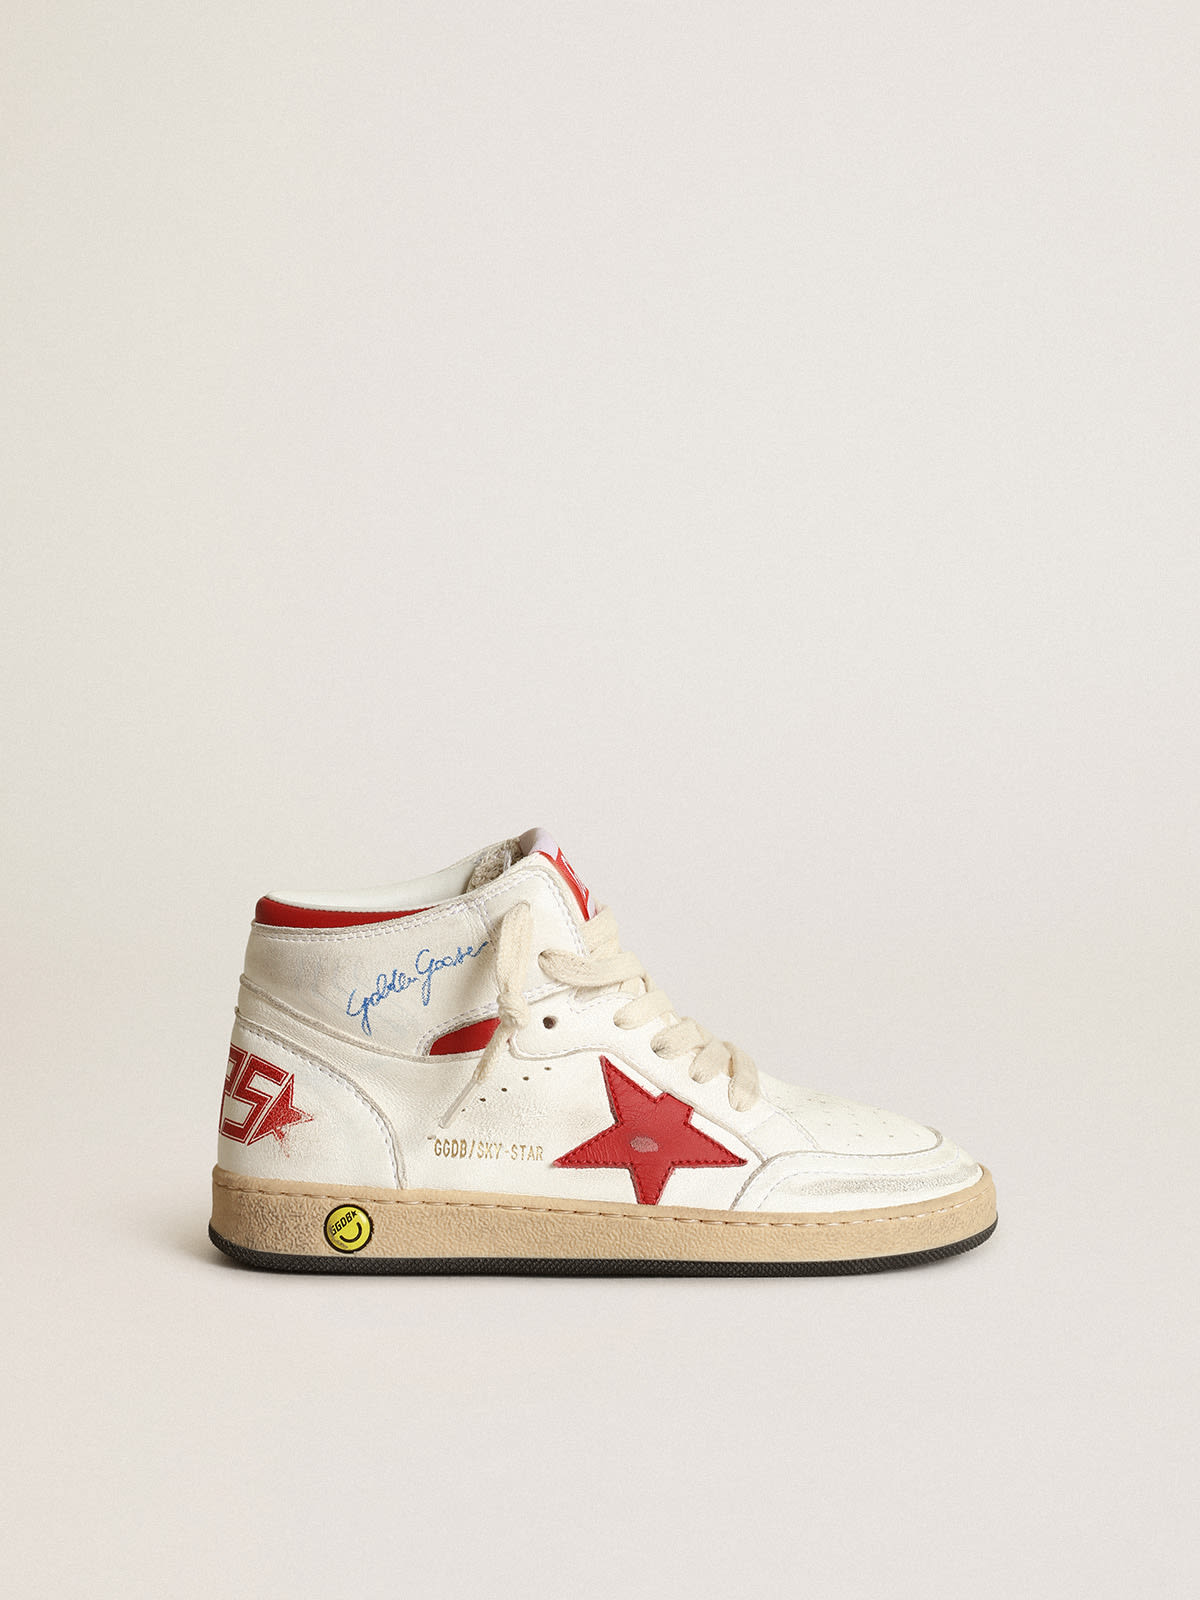 Golden Goose - Sneakers Sky-Star Young en cuir nappa blanc avec étoile et contrefort en cuir rouge in 